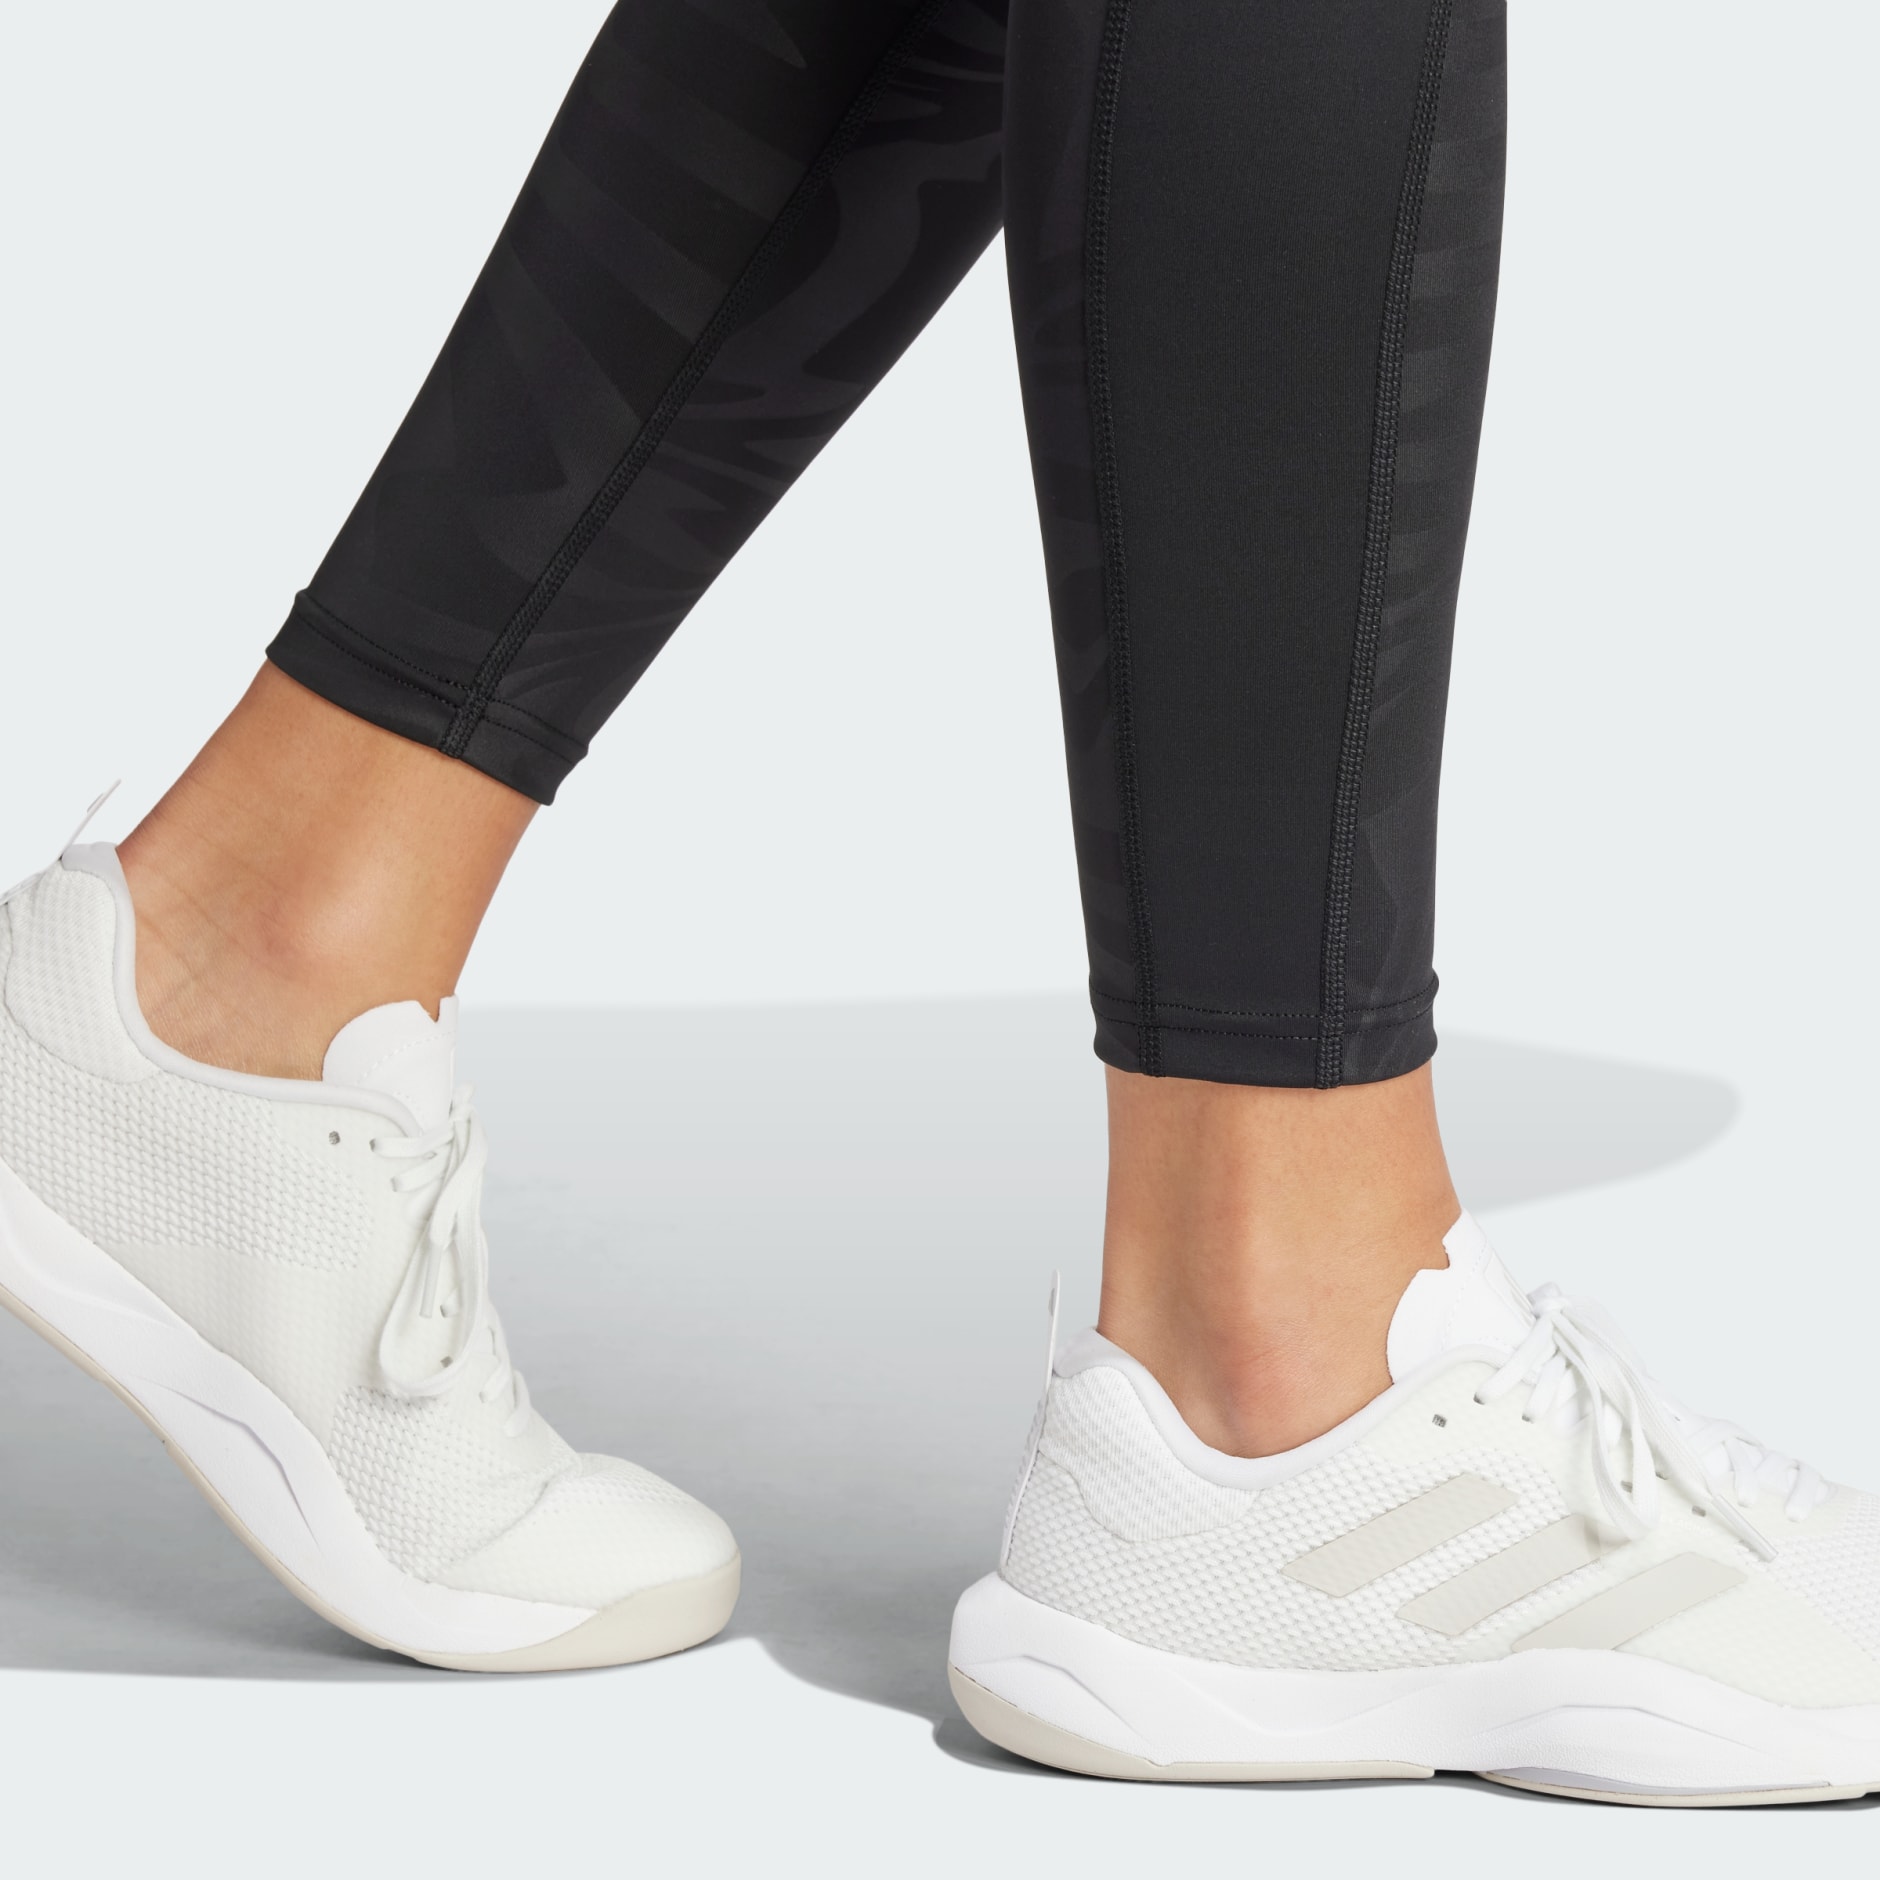 adidas Techfit Printed 7/8 Leggings - Black, Women's Training